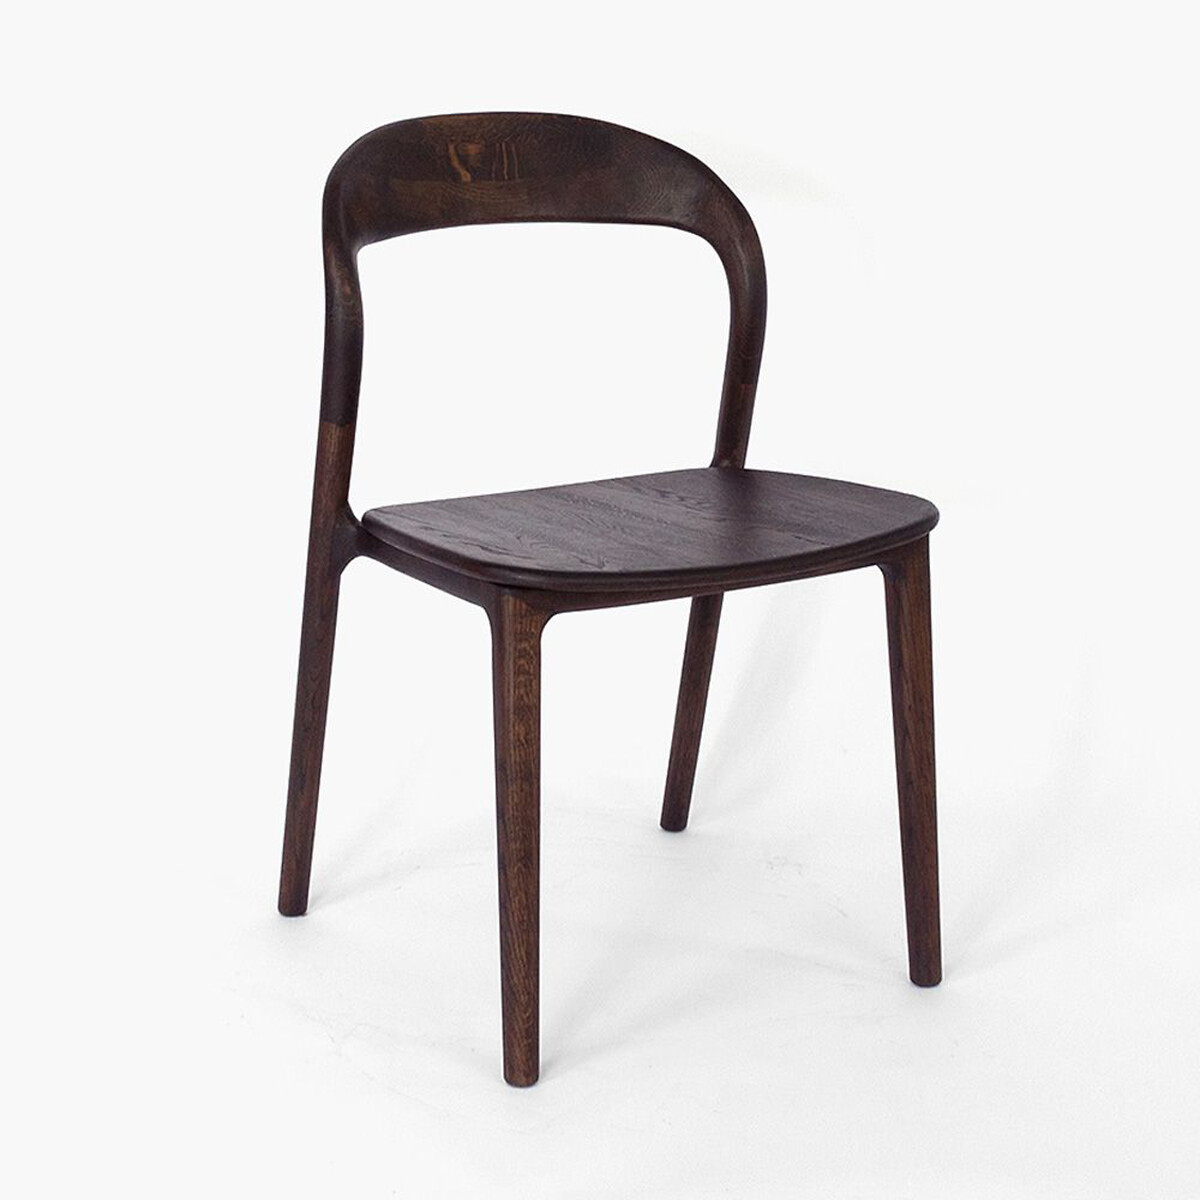 Стул Лугано единый размер каштановый стул полубарный лугано единый размер каштановый